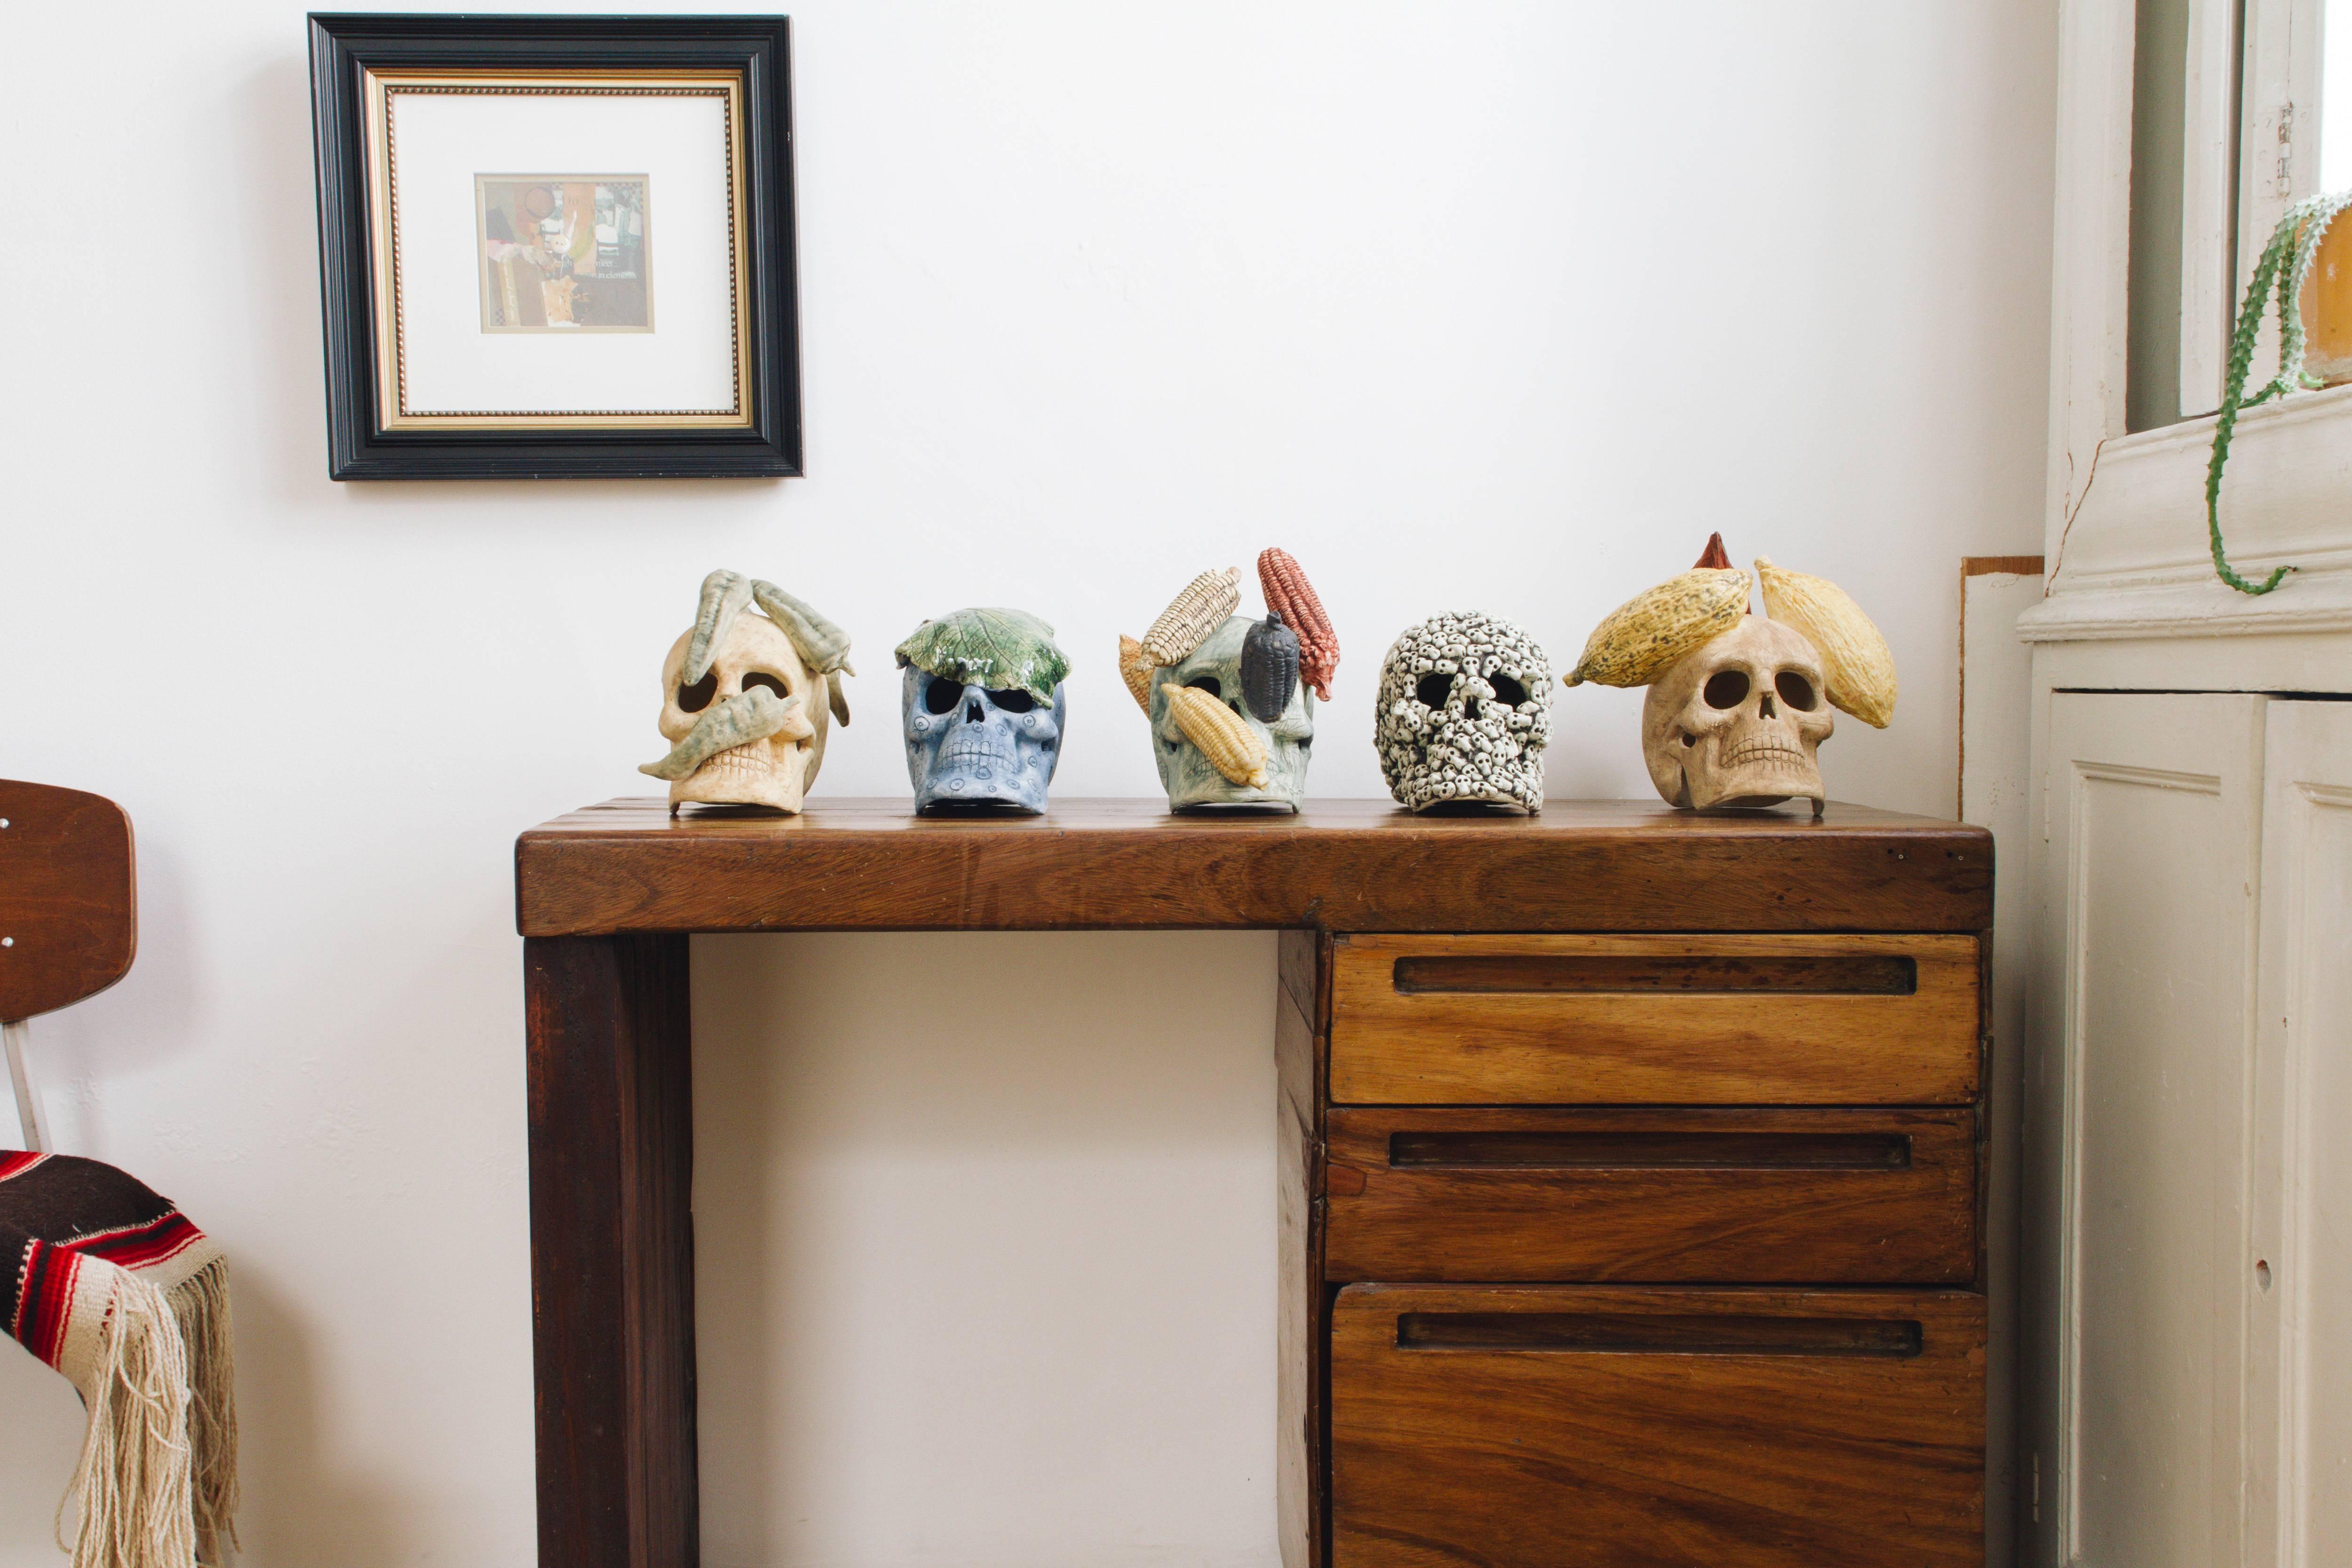 Mexican Ceramic Corn Skull Sculpture Hand Crafted Folk Art, Edition 1/30 In New Condition For Sale In Queretaro, Queretaro